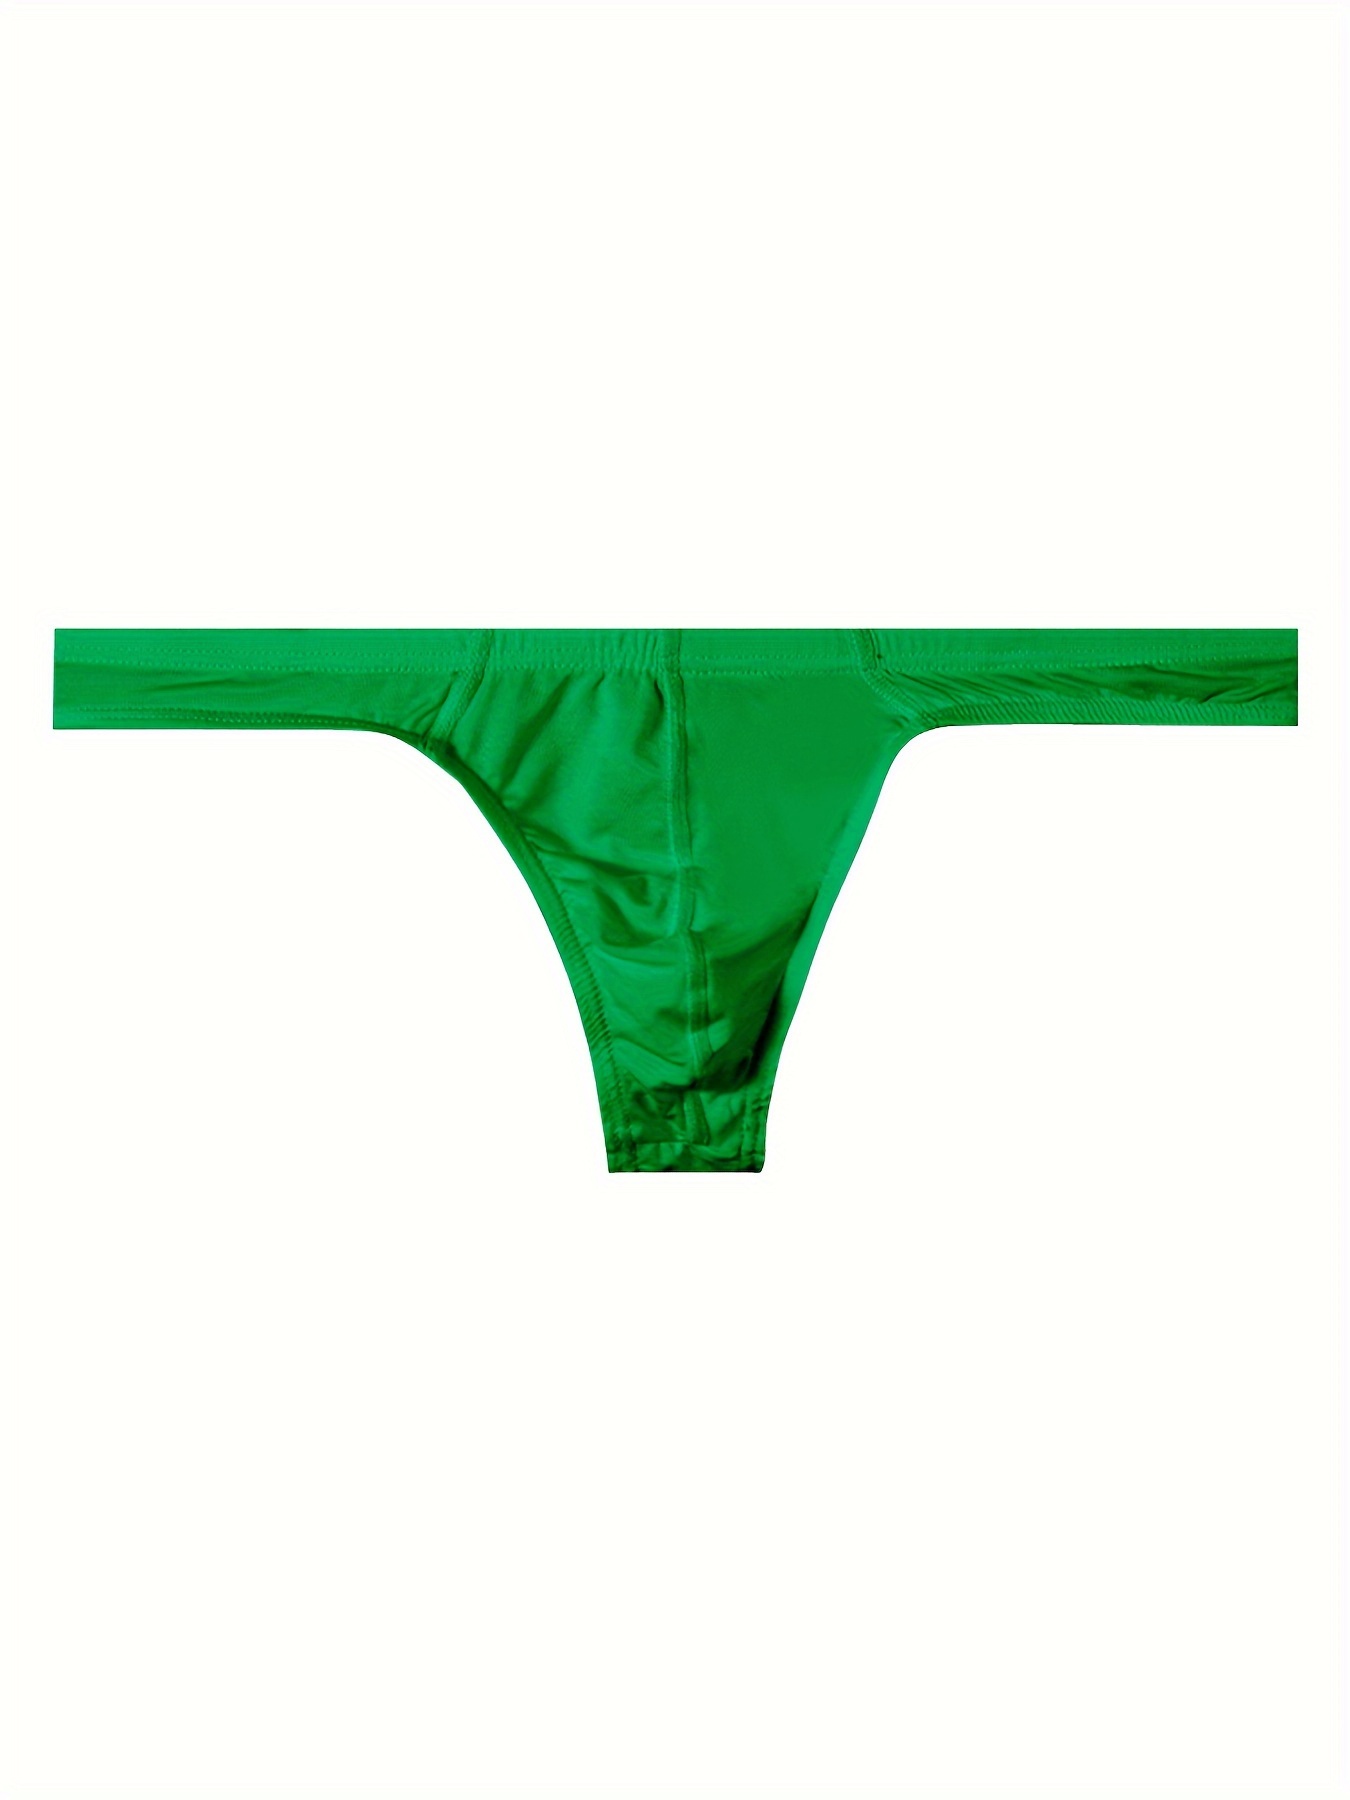 Chahoo Men's Thong Underwear Sexy Stretch G Mauritius